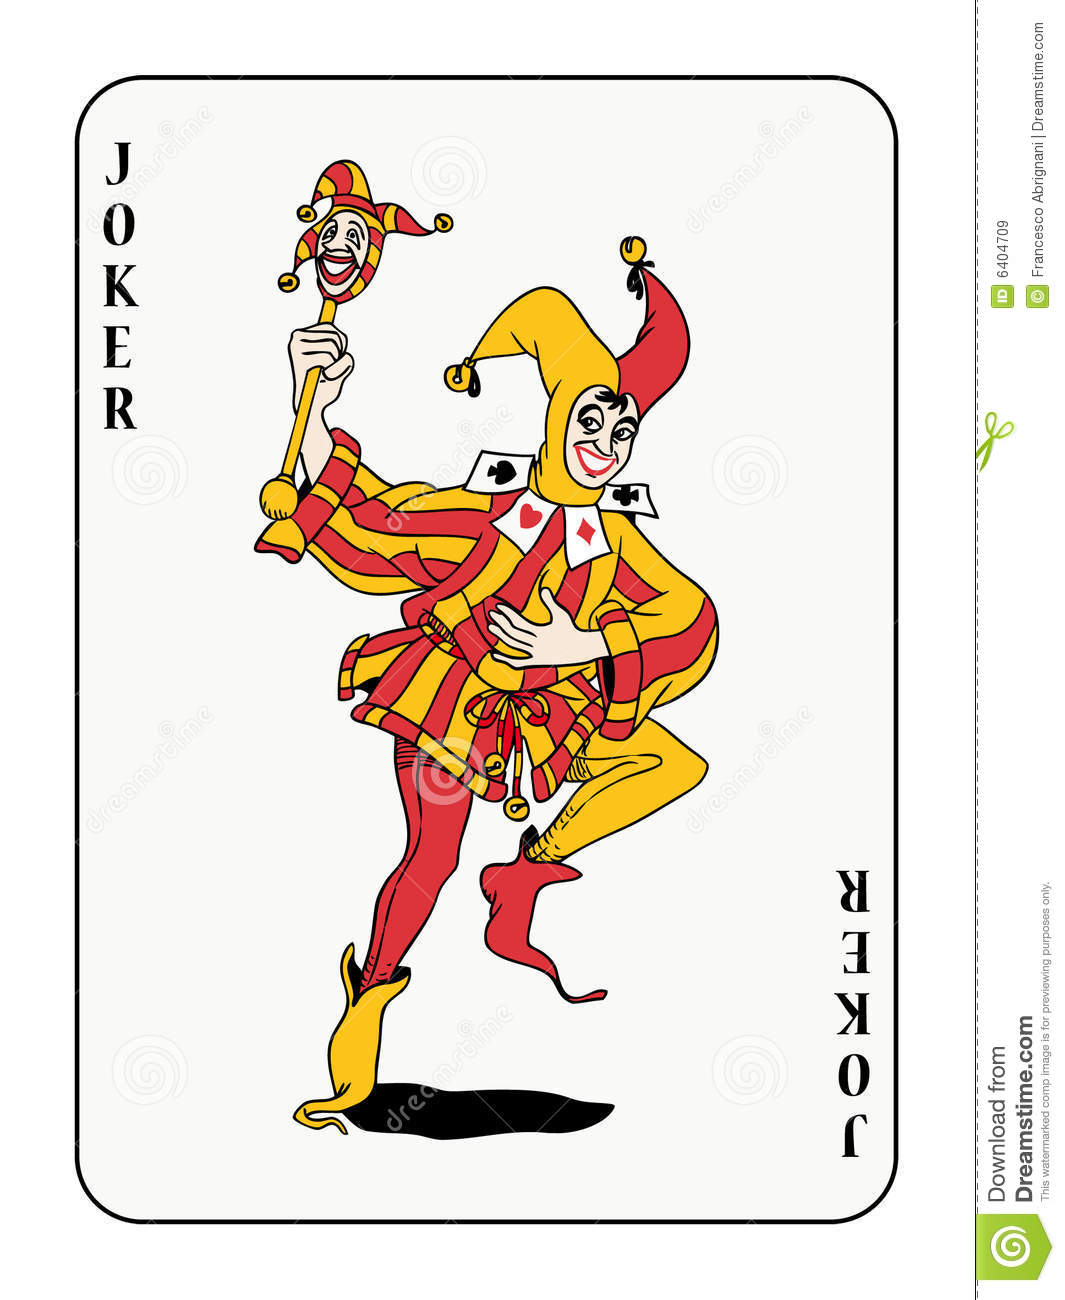 Joker Royalty Free Stock Images   Image  6404709